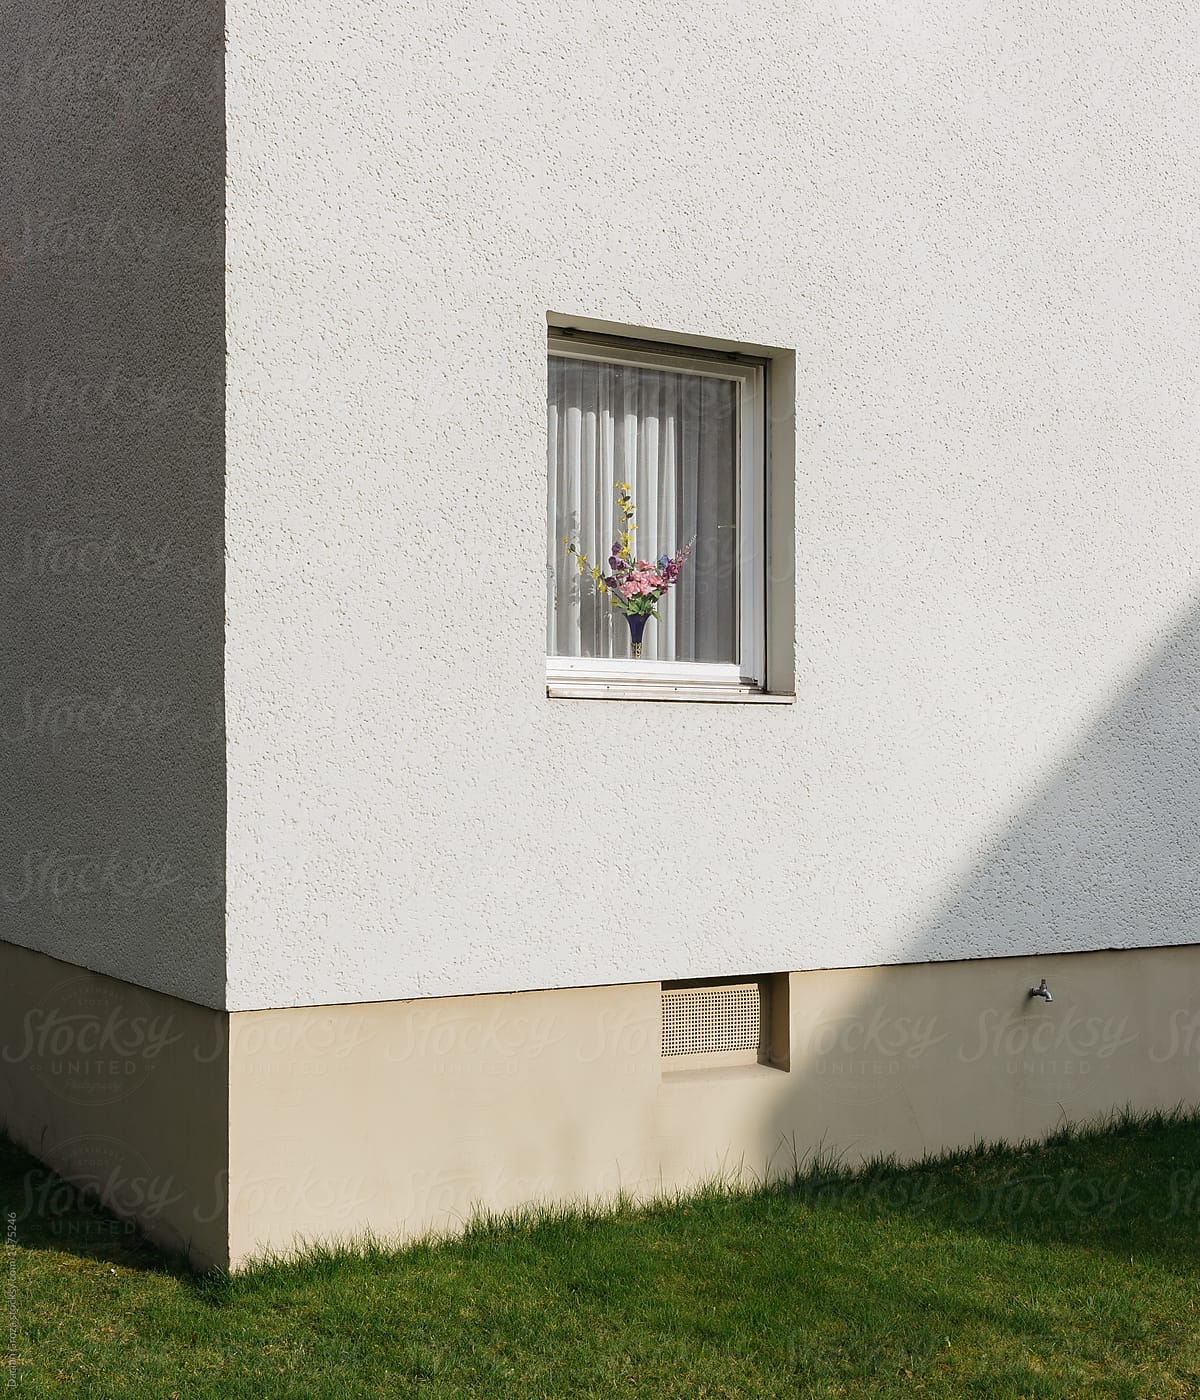 Solitary window